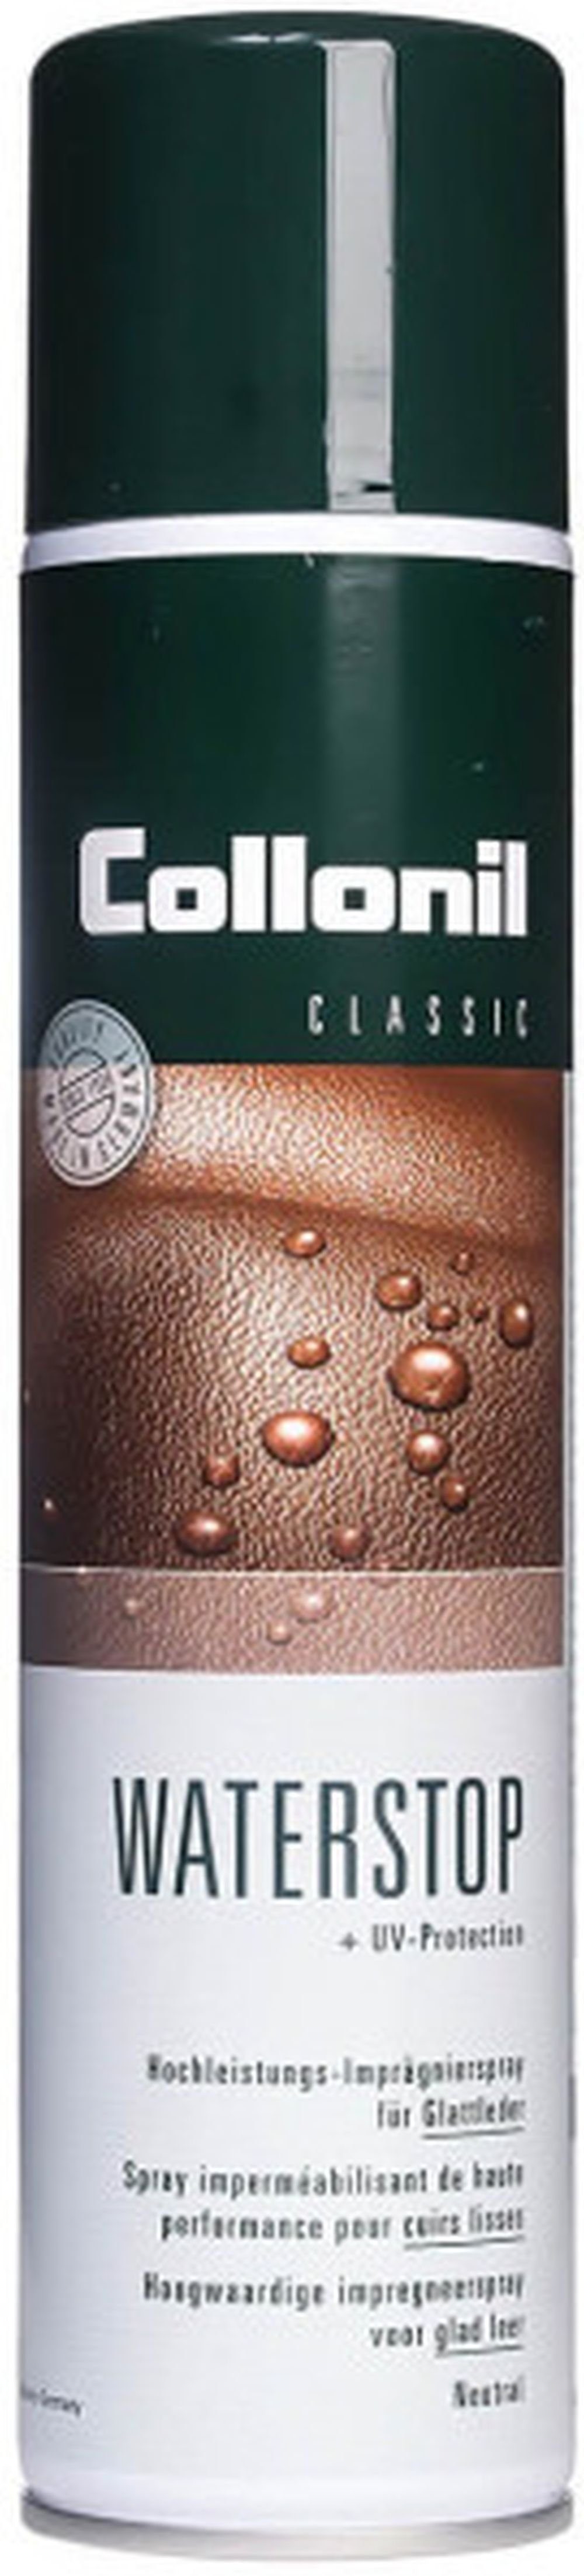 Collonil Waterstop Classic 400 ml - Imprägnierspray mit Schuh-Imprägnierspray UV-Schutz